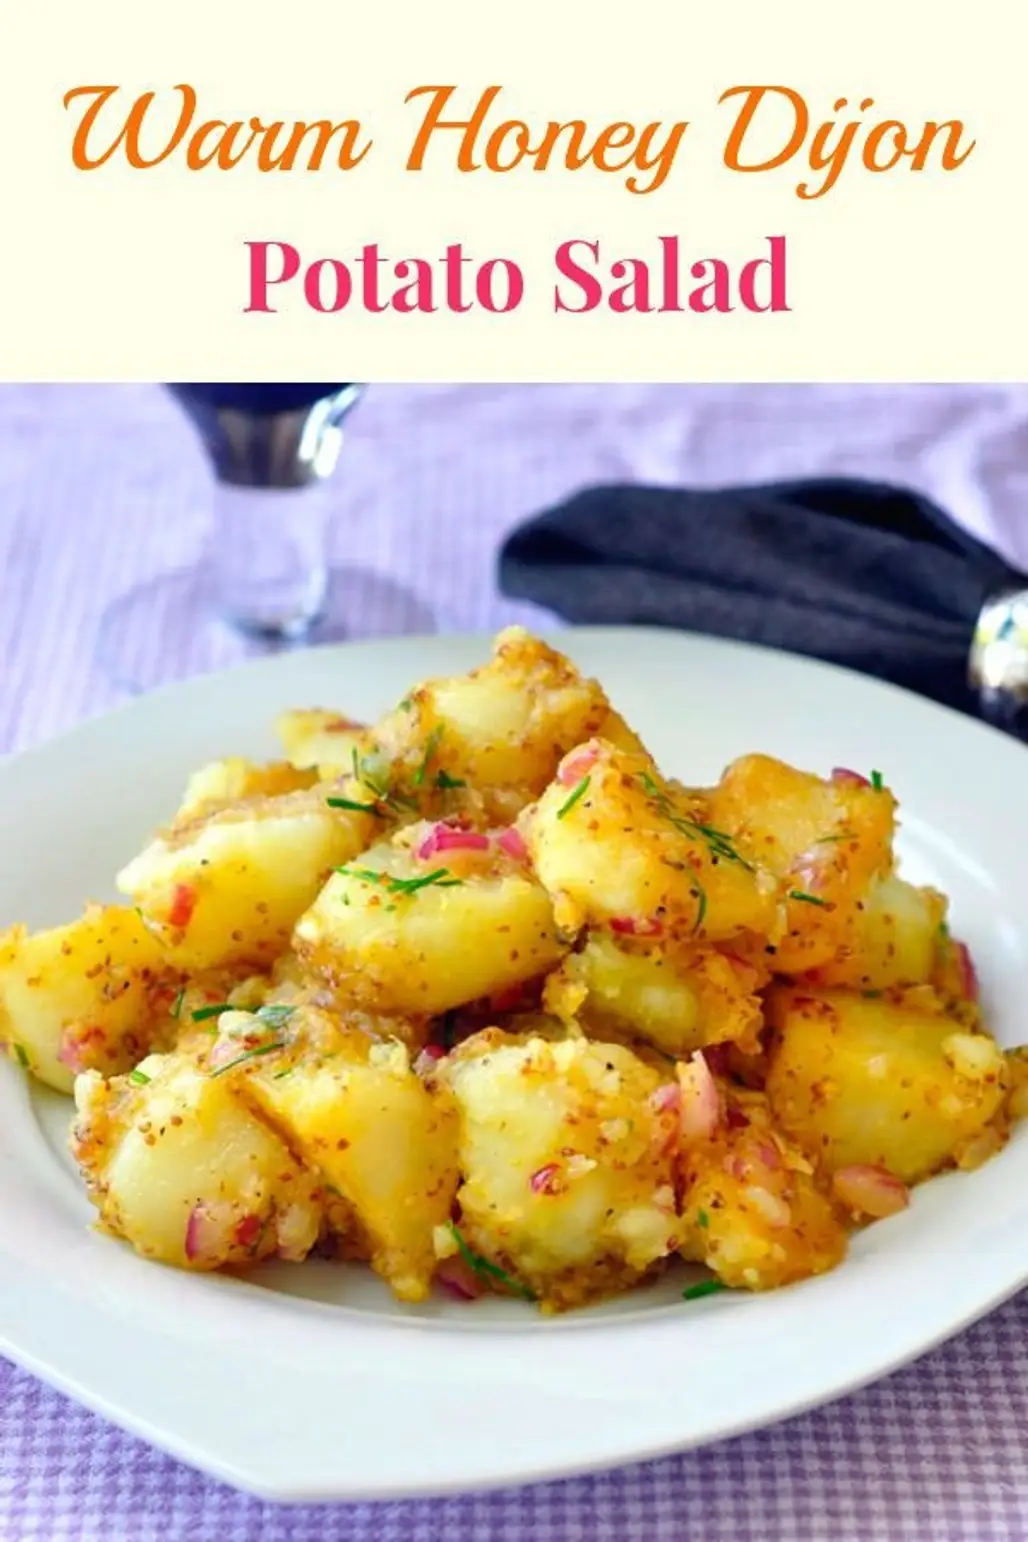 Warm Honey Dijon Potato Salad